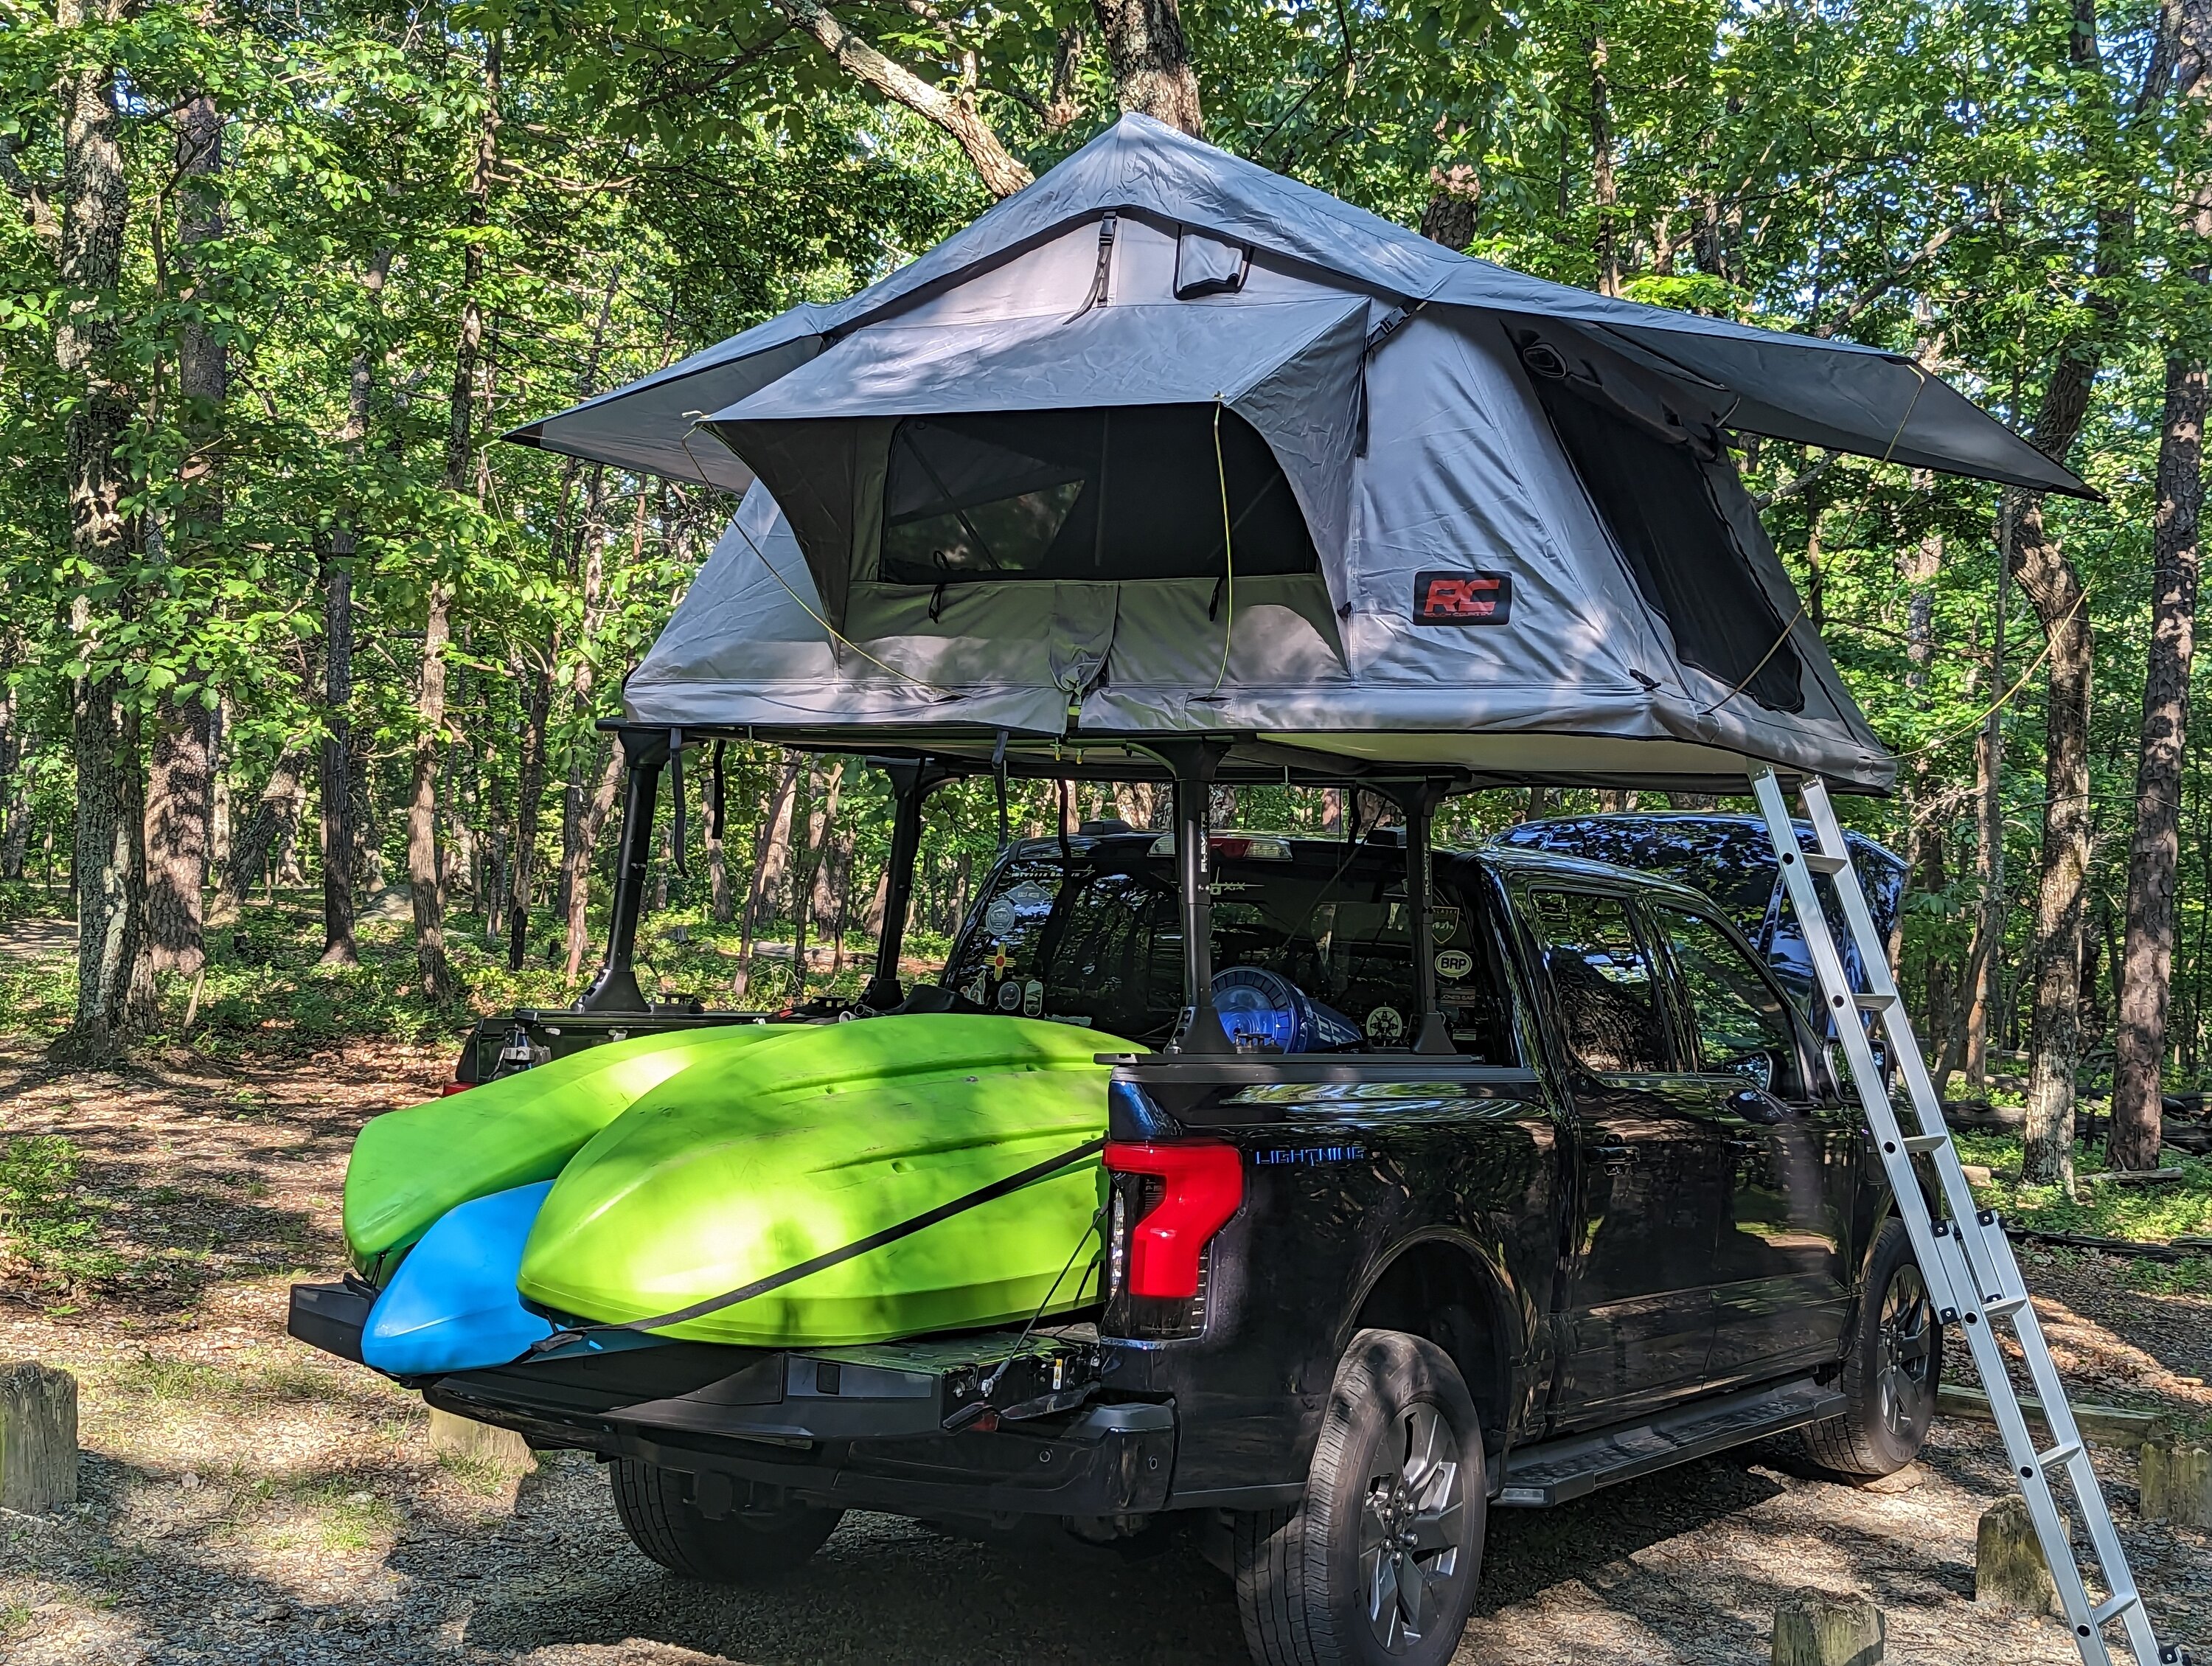 Ford F-150 Lightning 2000-mile road trip with my DIY Lightning Trail slide-in pop-up camper PXL_20230602_214950304